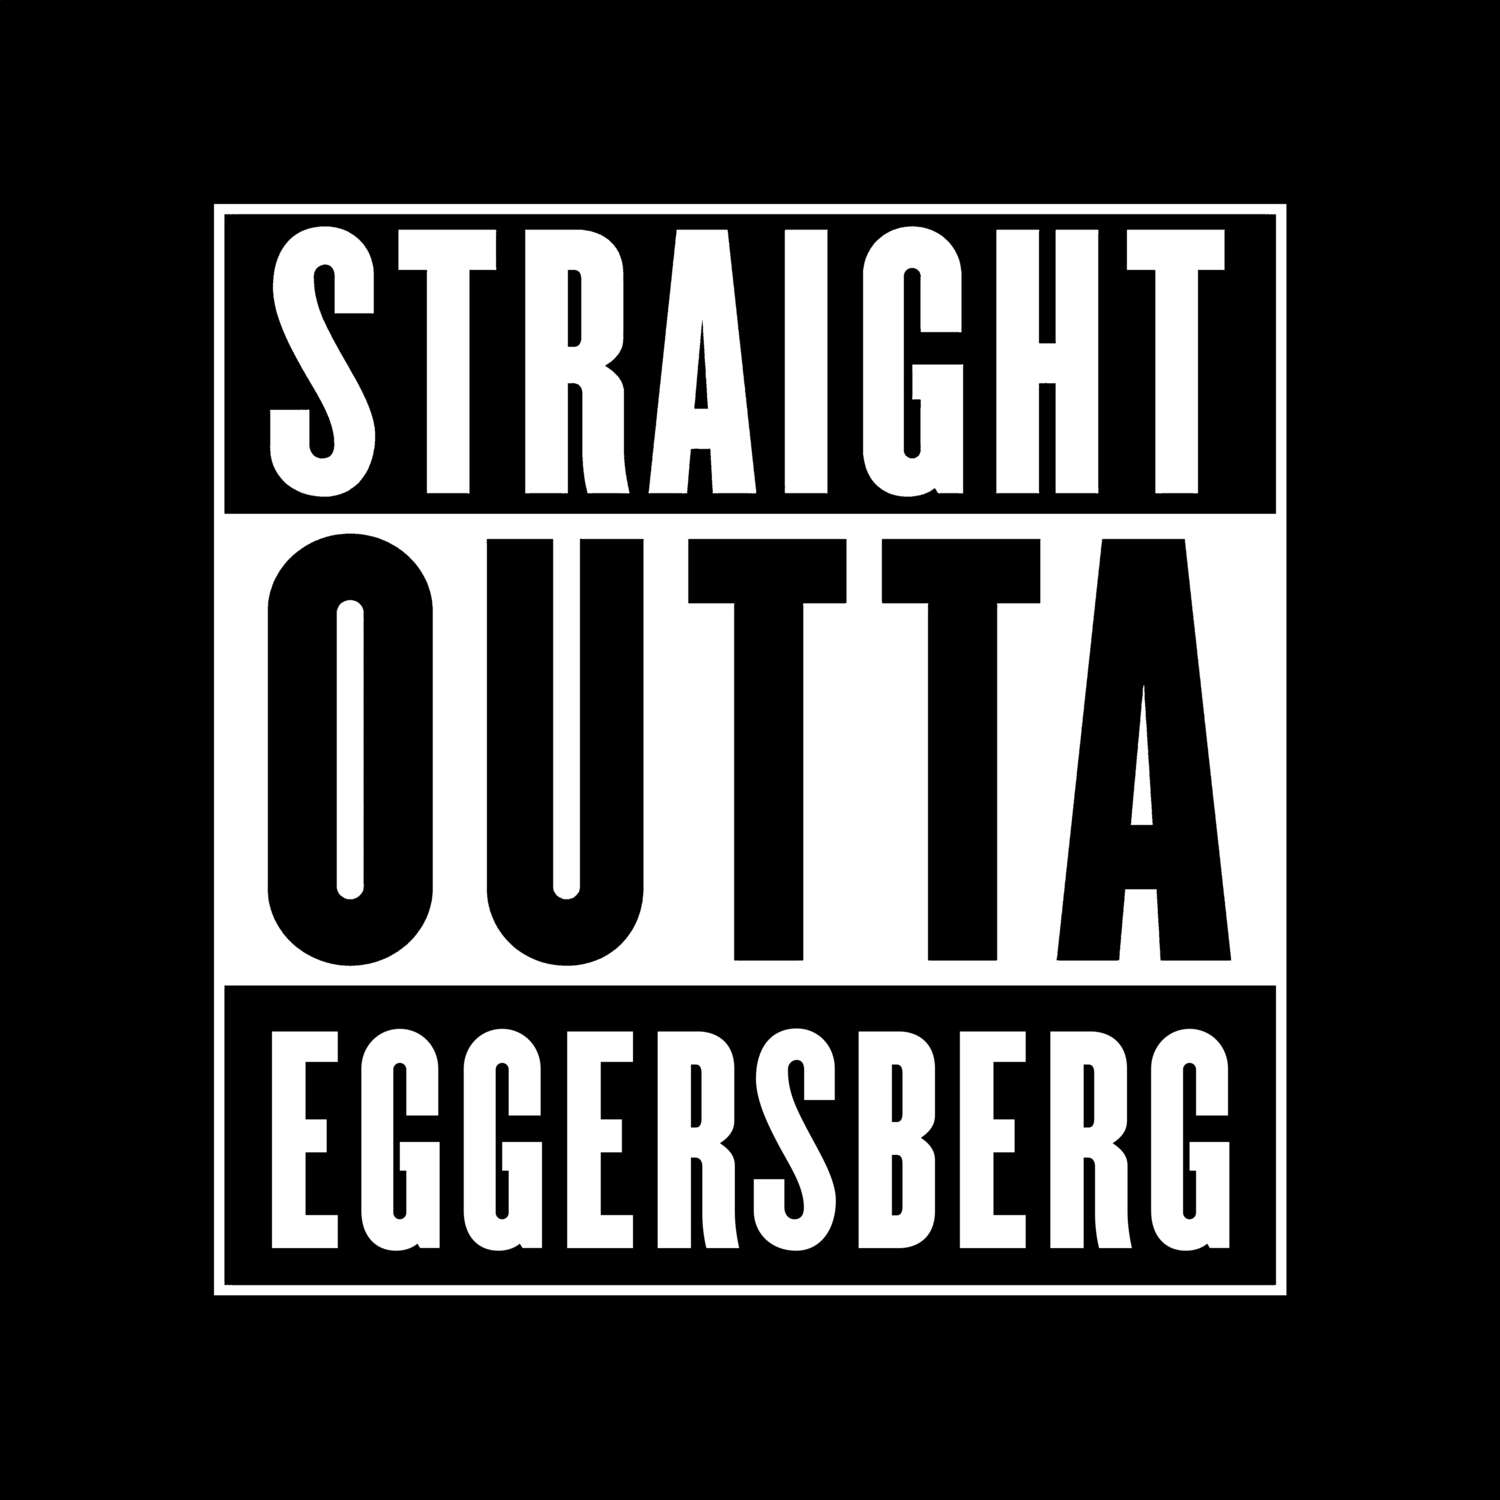 Eggersberg T-Shirt »Straight Outta«